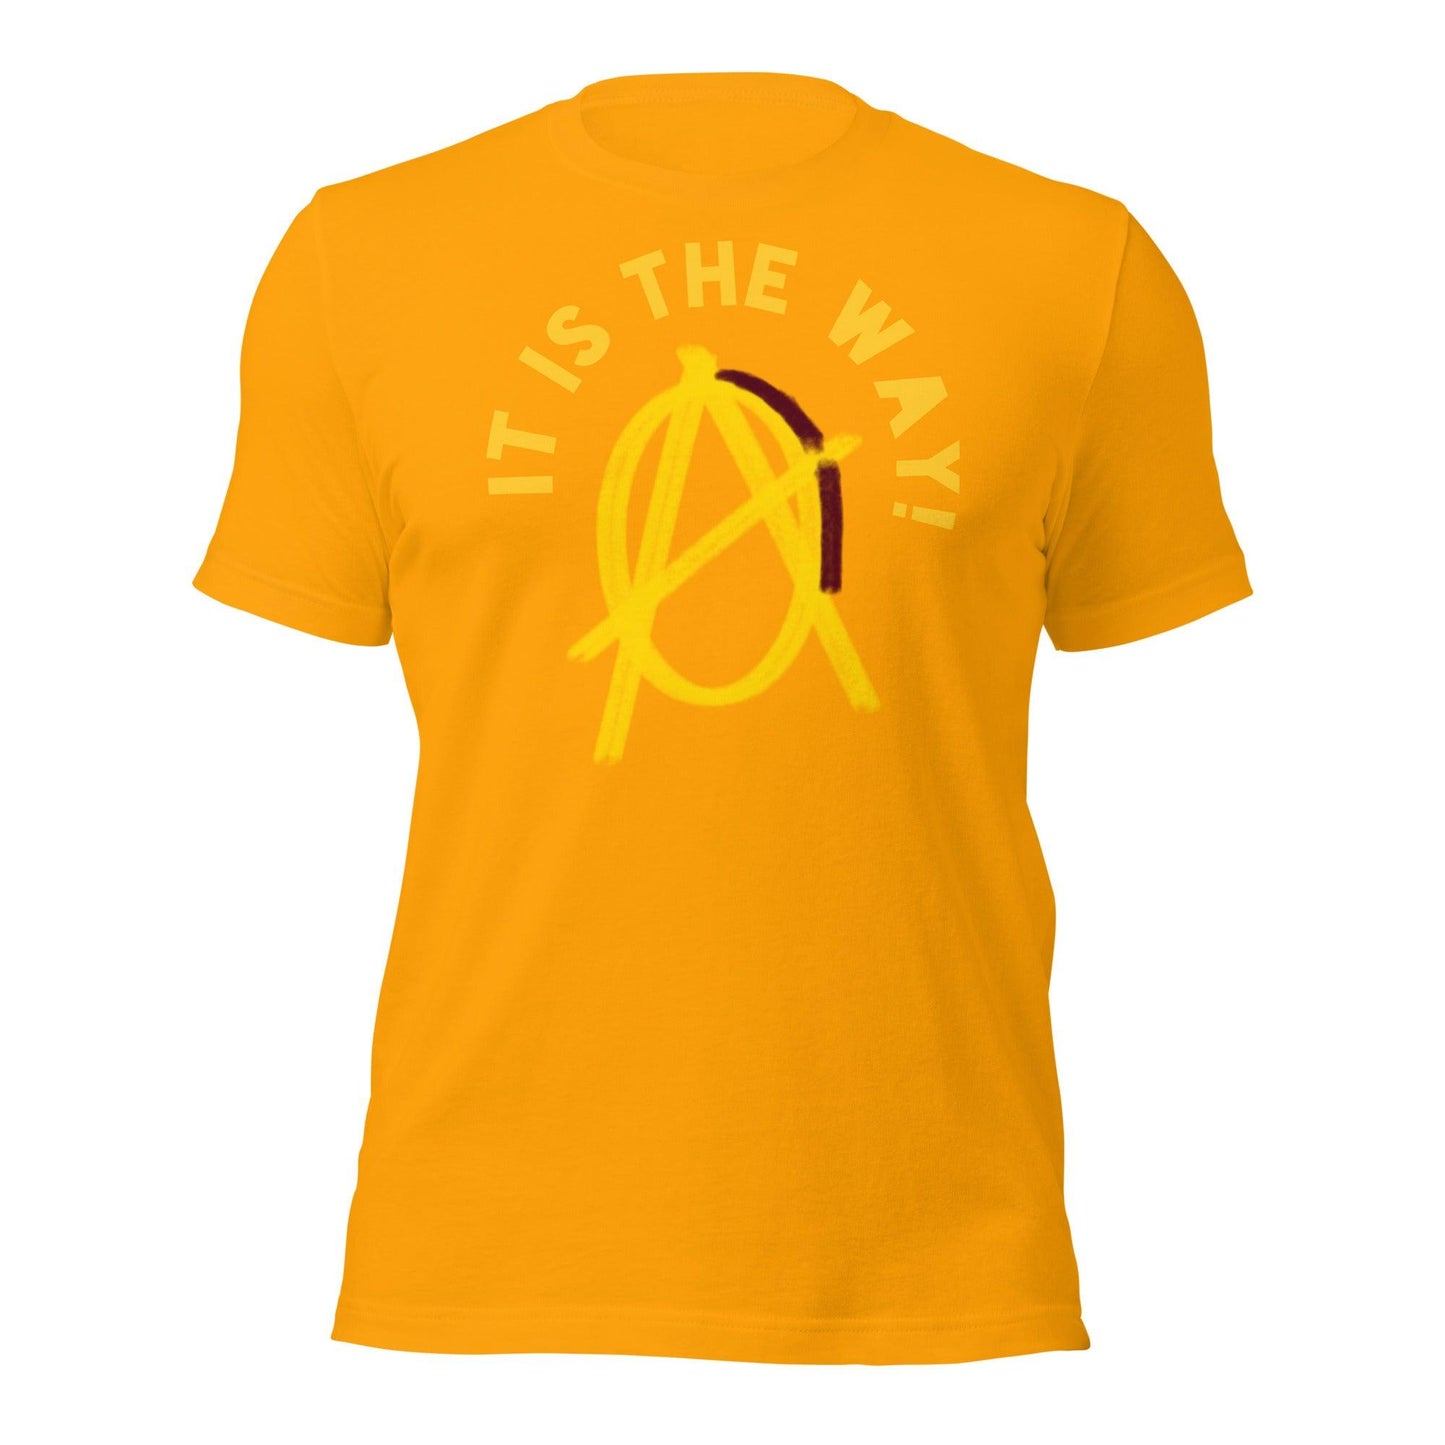 Anarchy Wear "It is the way!" Pastels Unisex t-shirt - AnarchyWear